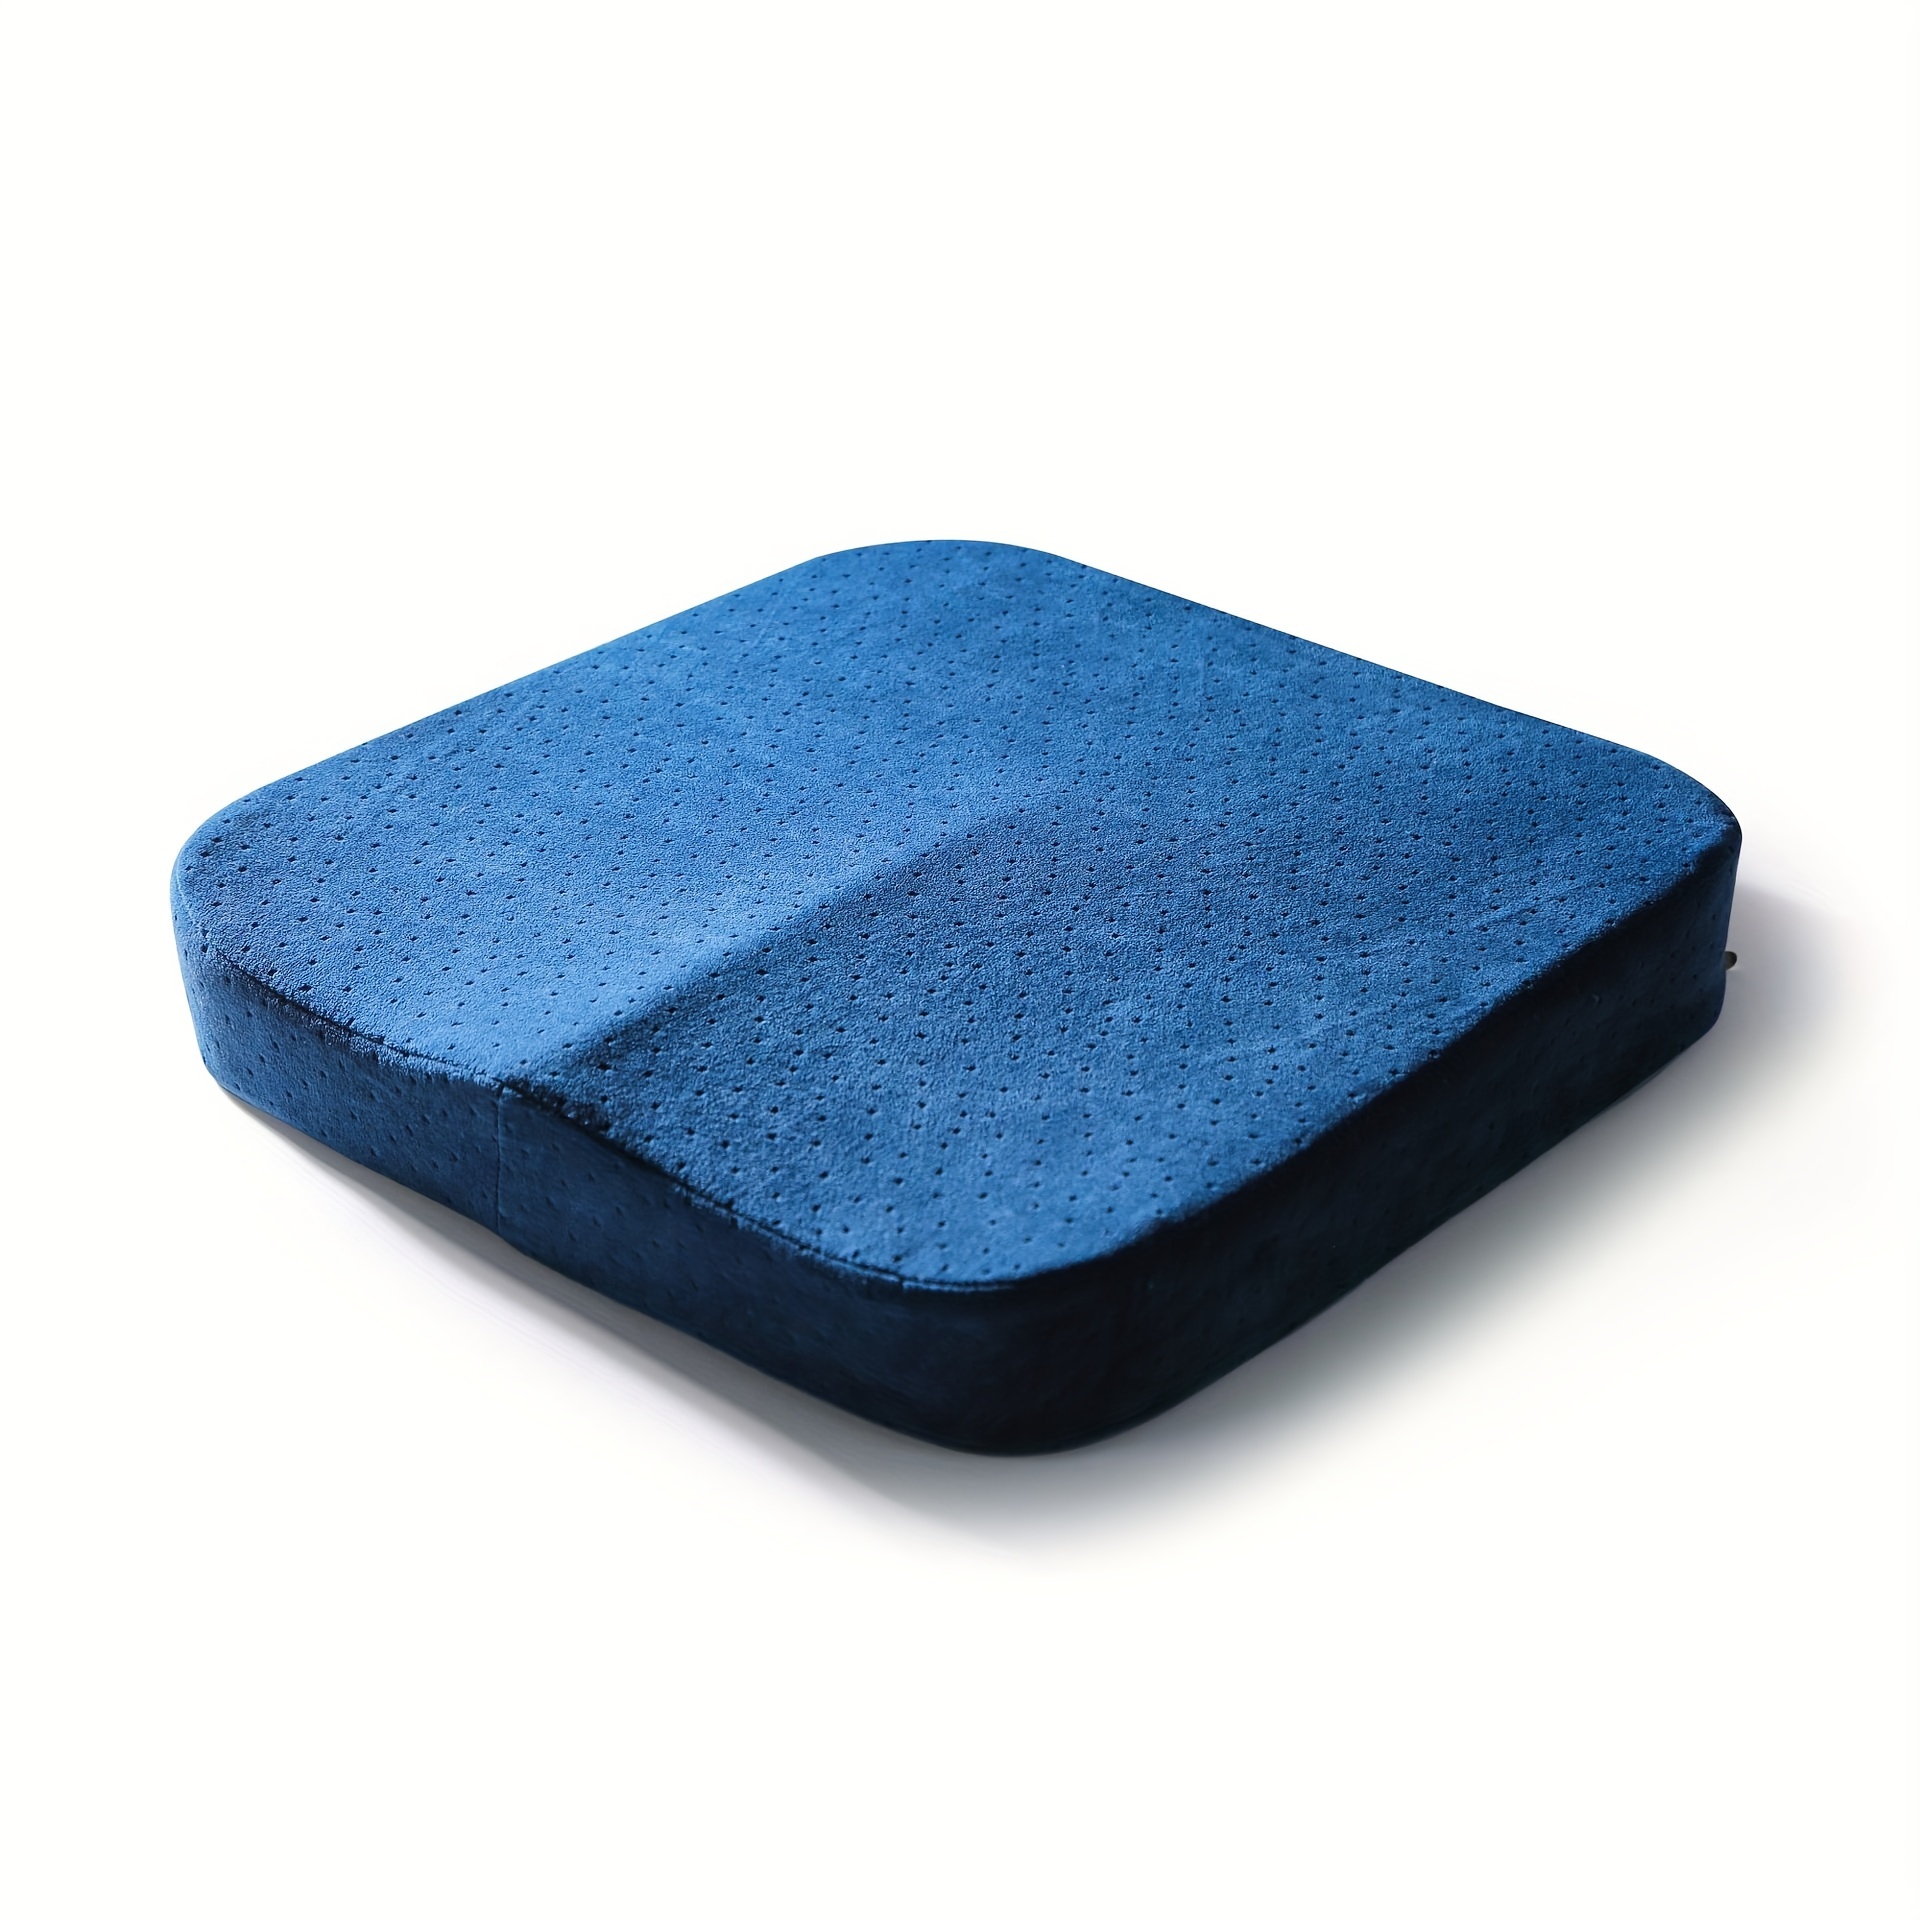 Memory Foam Seat Cushion - Chair Pillow, Drive Universal Gel and Memory  Foam Posterior Seat Cushion